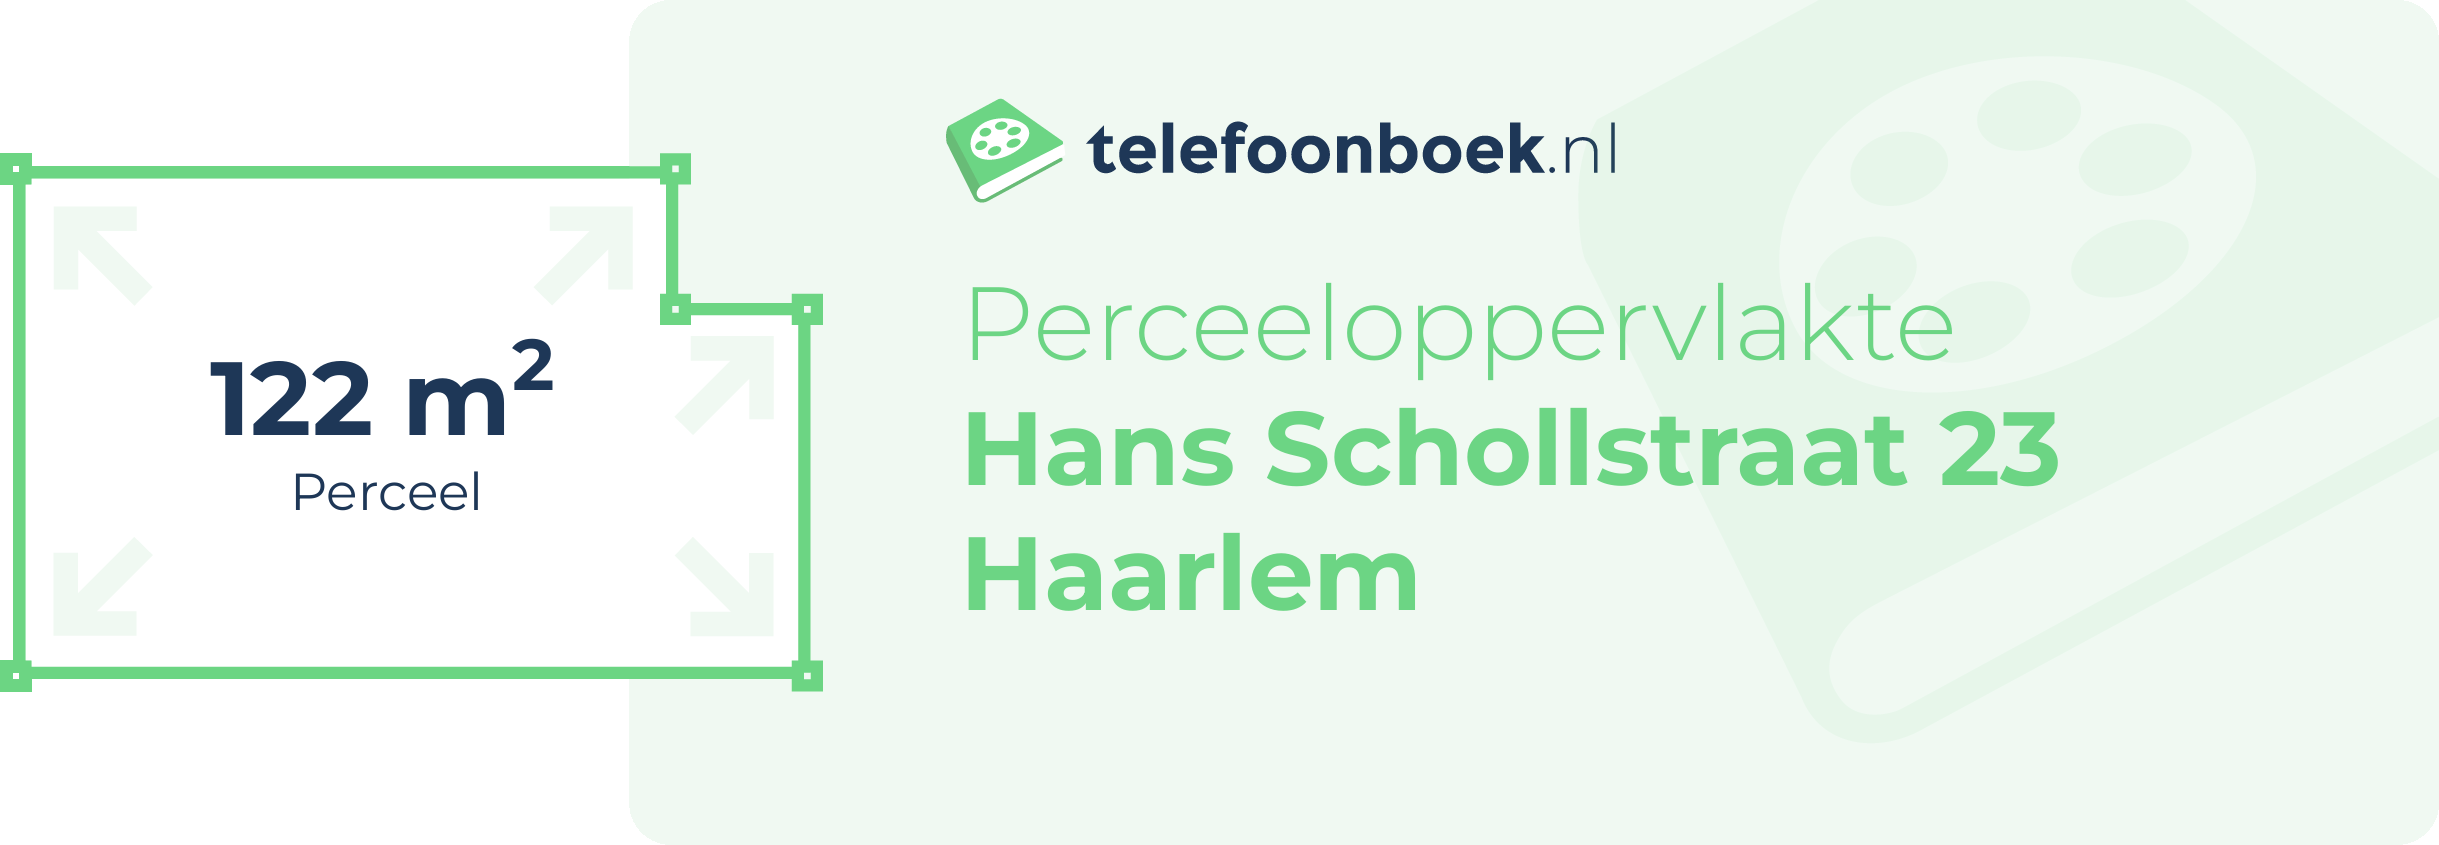 Perceeloppervlakte Hans Schollstraat 23 Haarlem